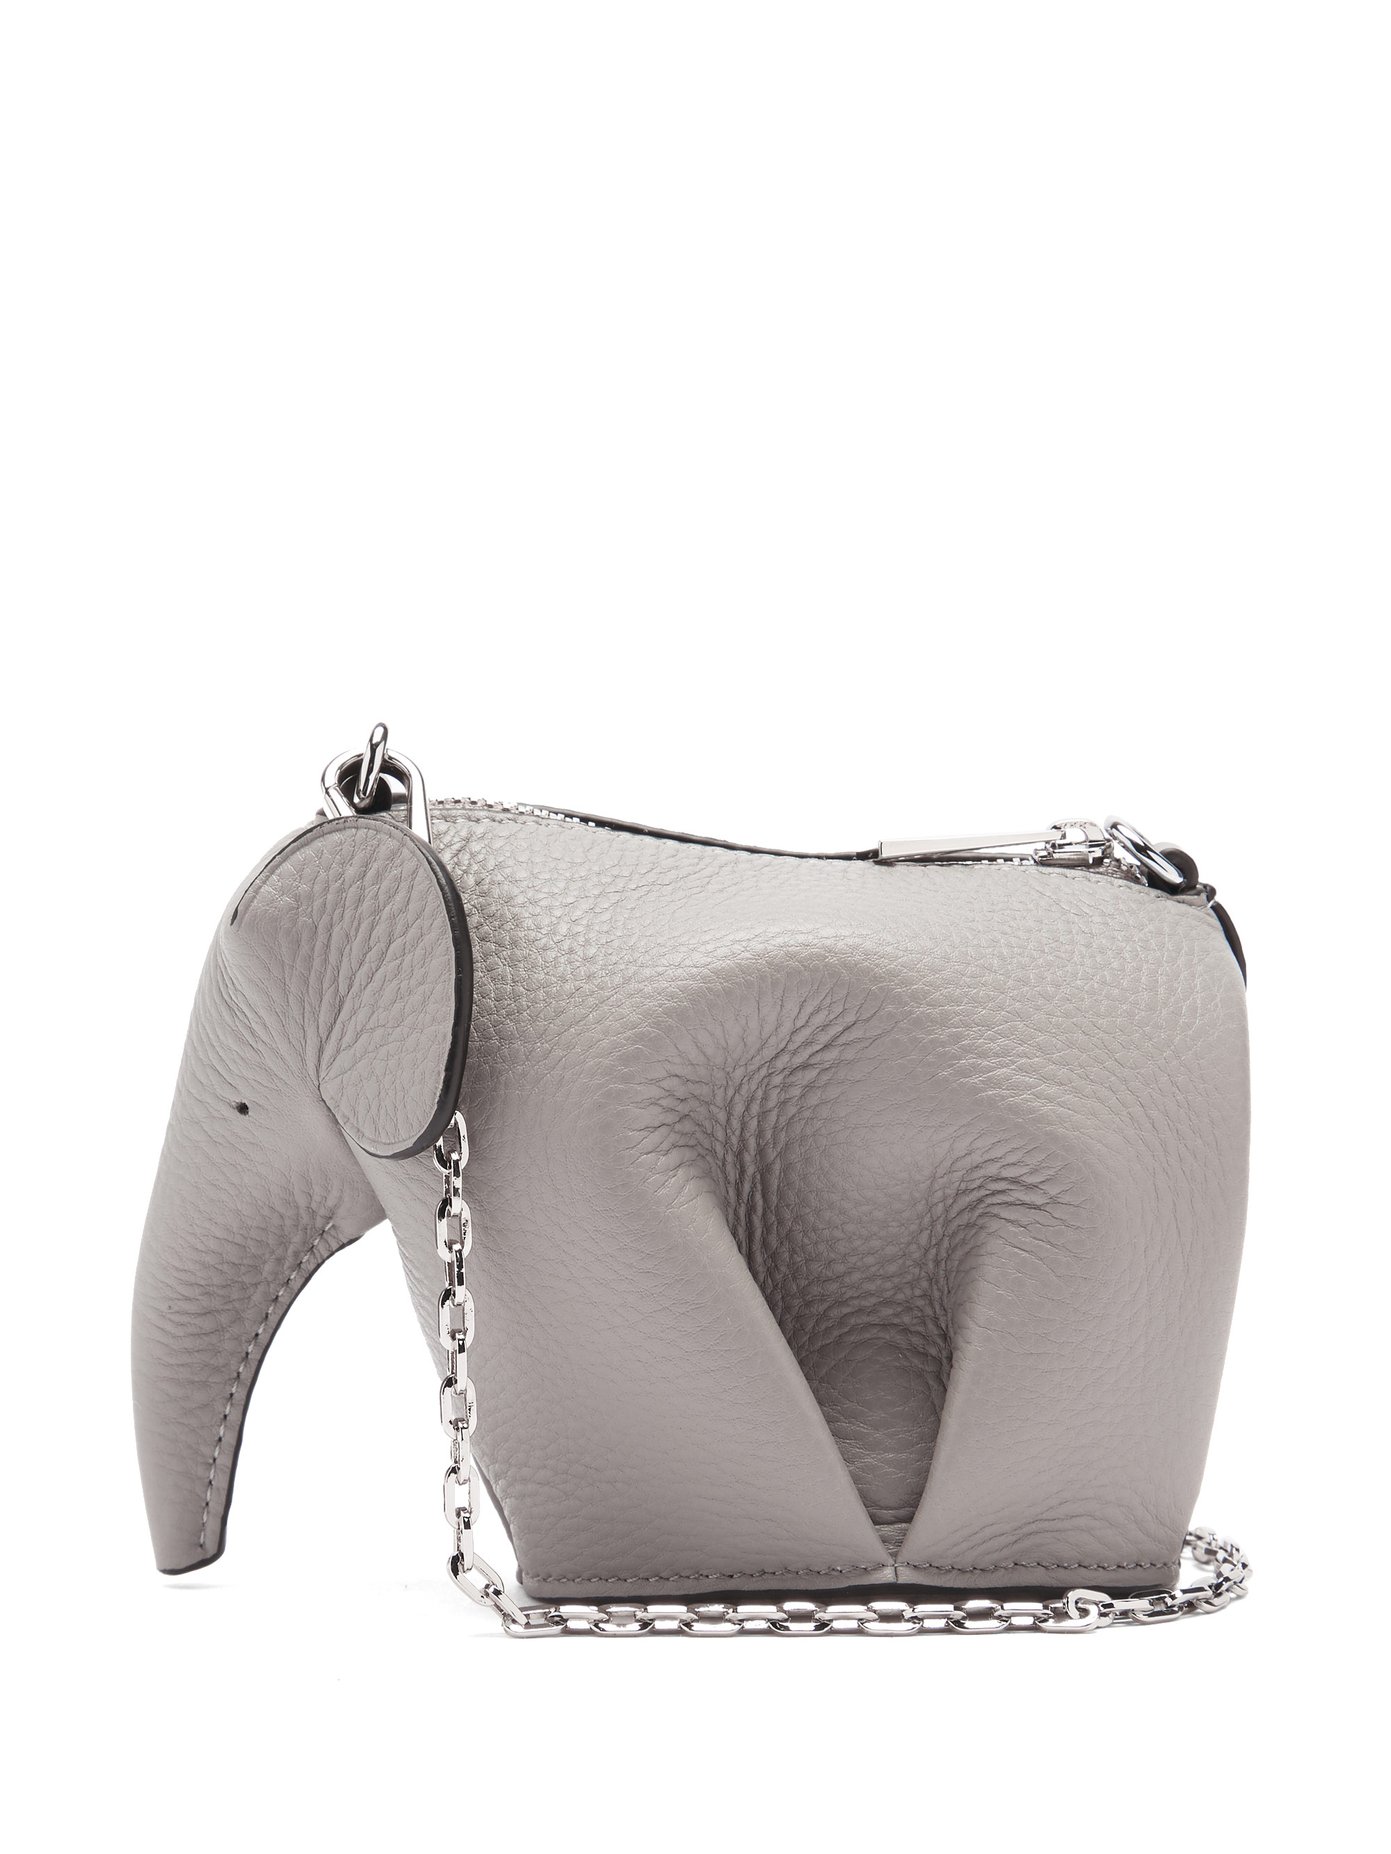 loewe elephant bag price